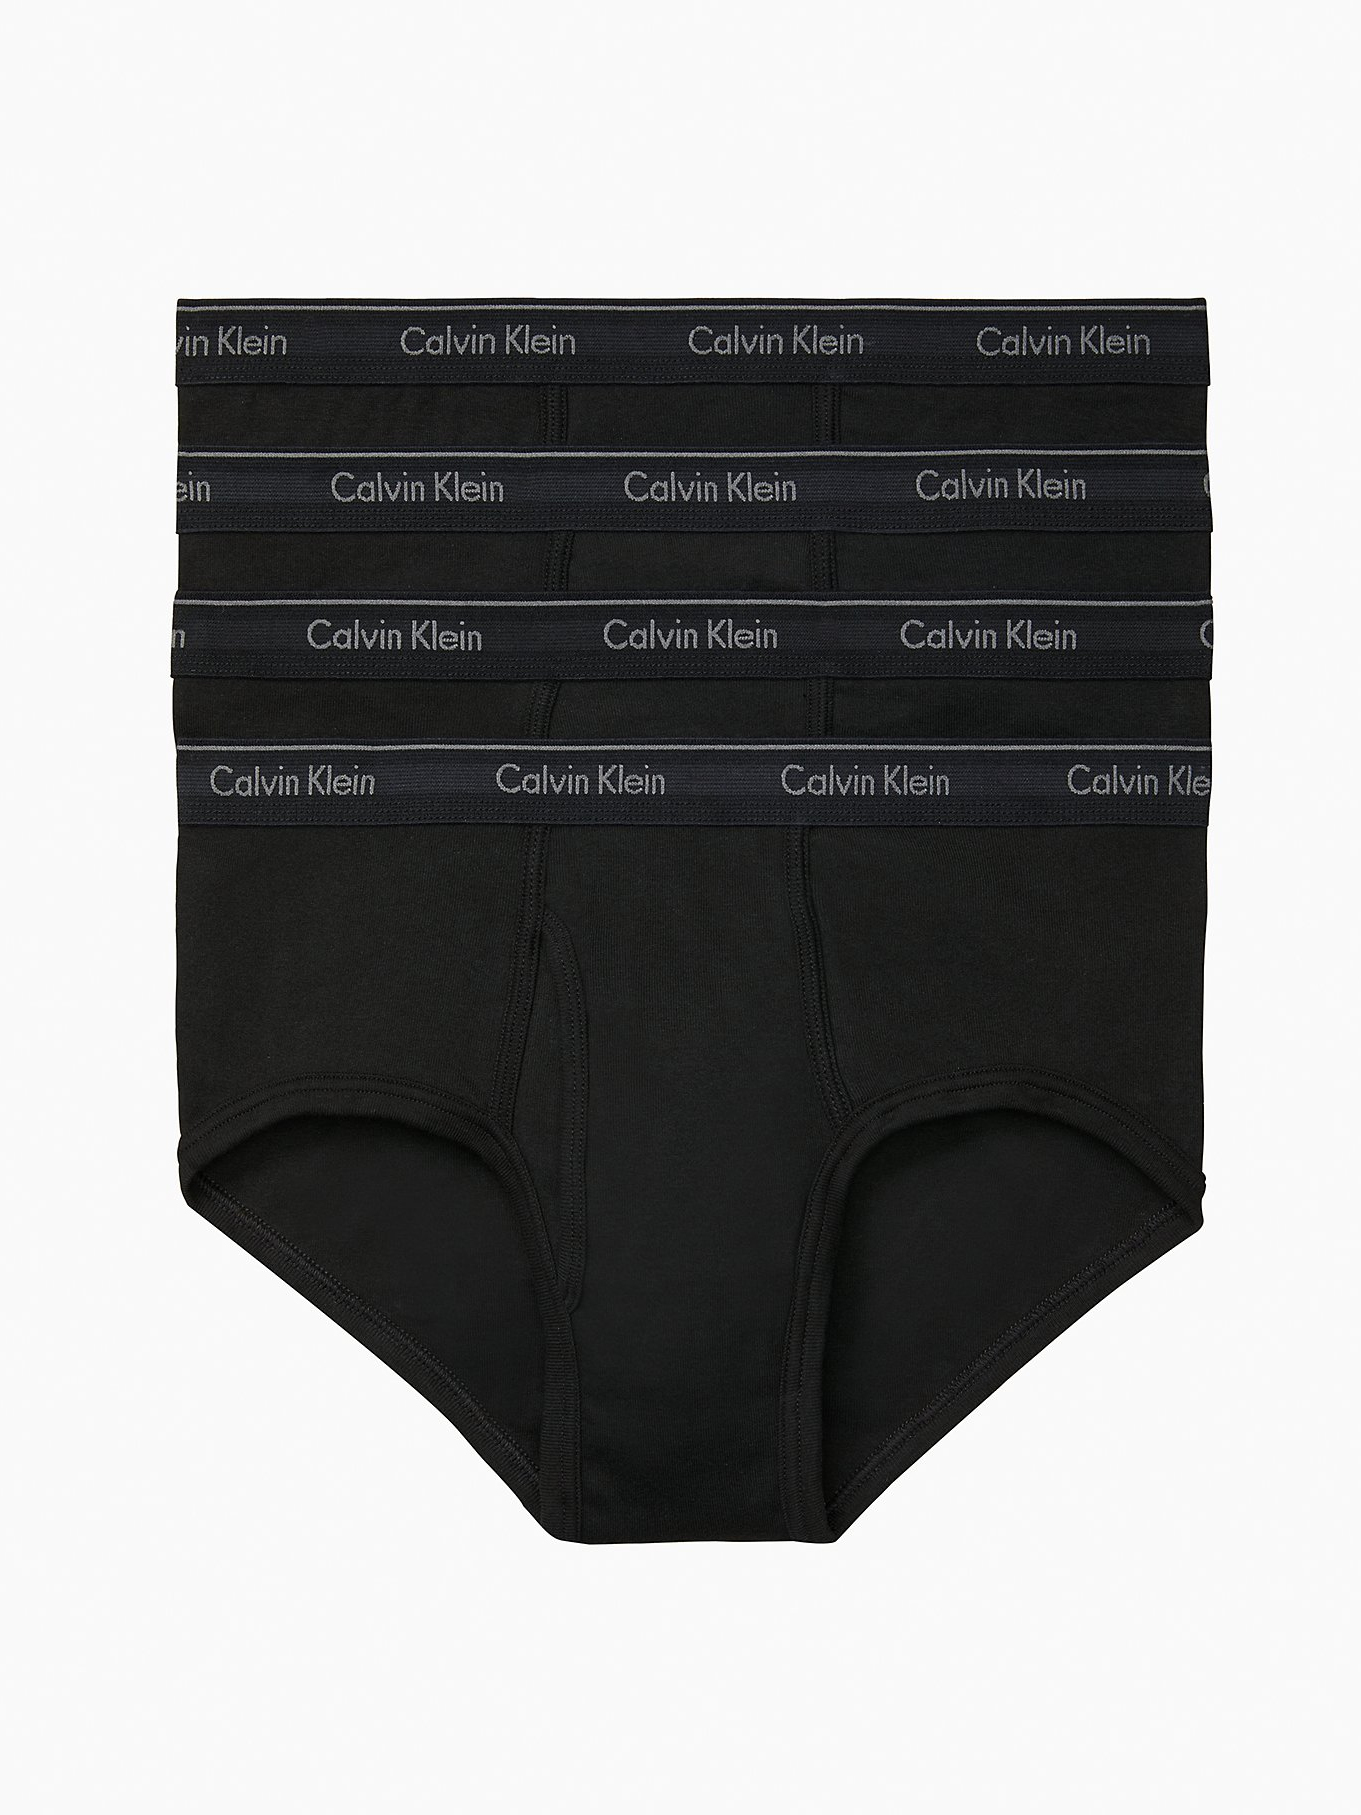 Calvin Klein Men's Cotton Classics Brief -4 Pack nb4000